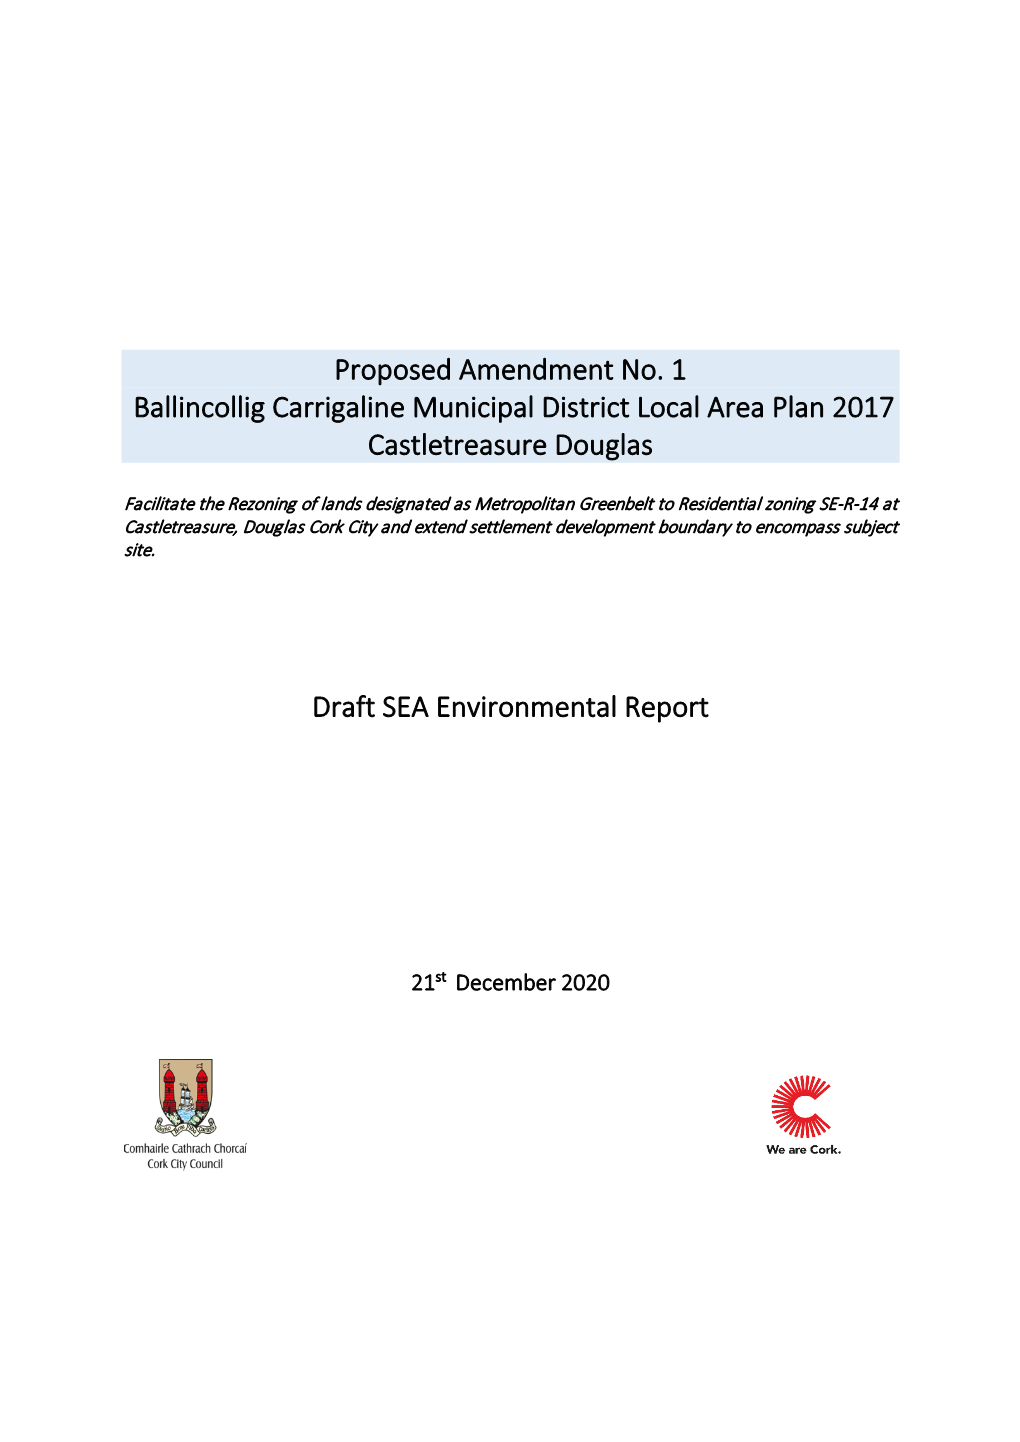 Proposed Amendment No. 1 Ballincollig Carrigaline Municipal District Local Area Plan 2017 Castletreasure Douglas